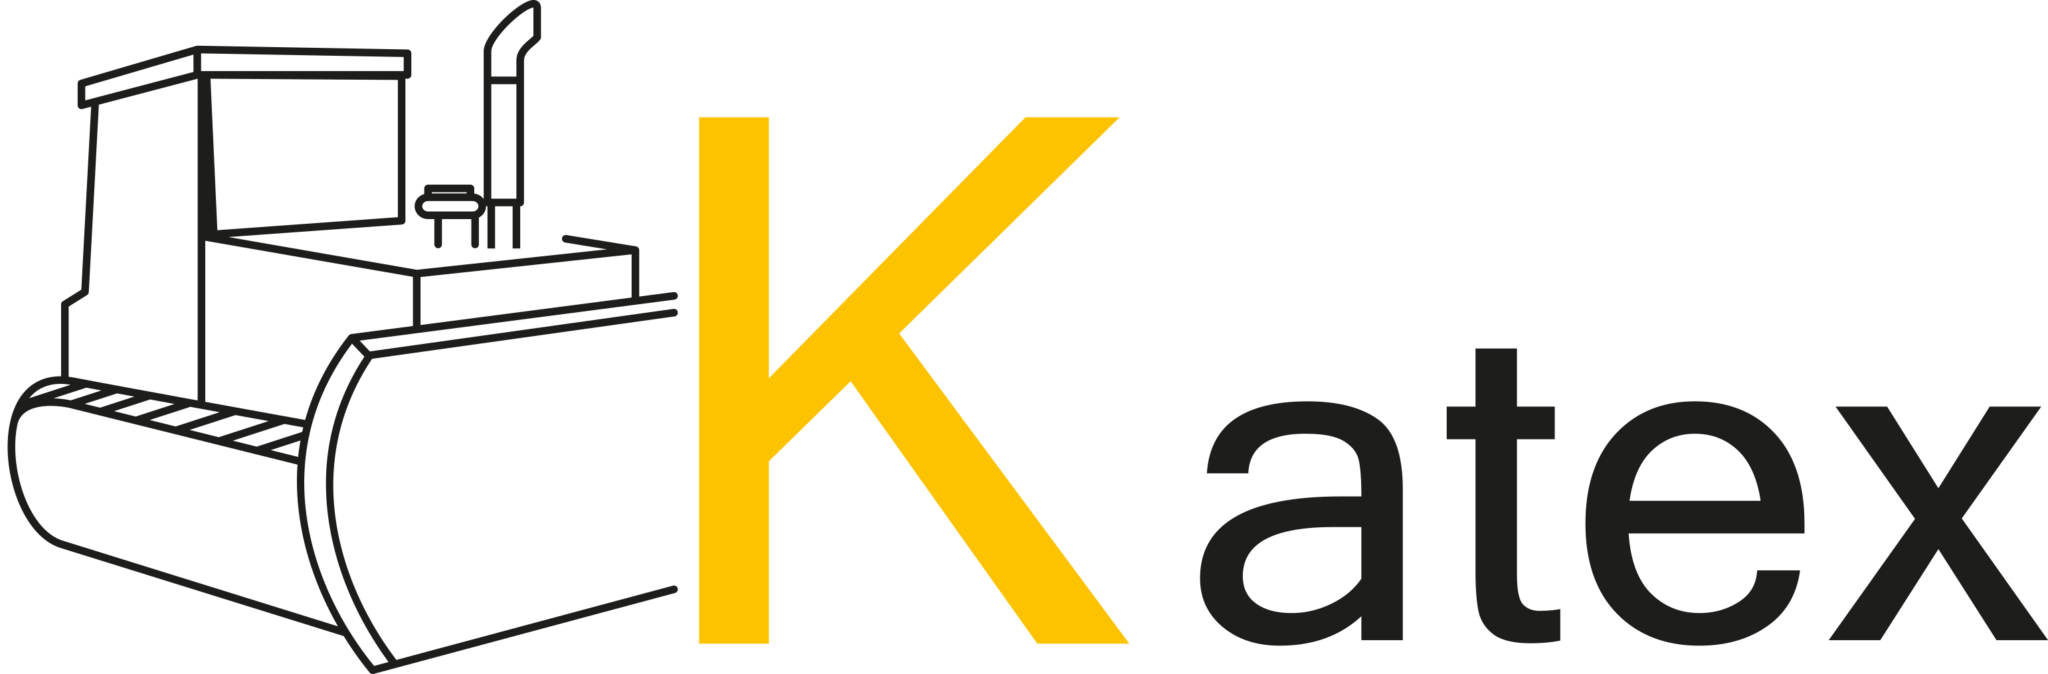 katex-logo-vector-1-1-2048x674